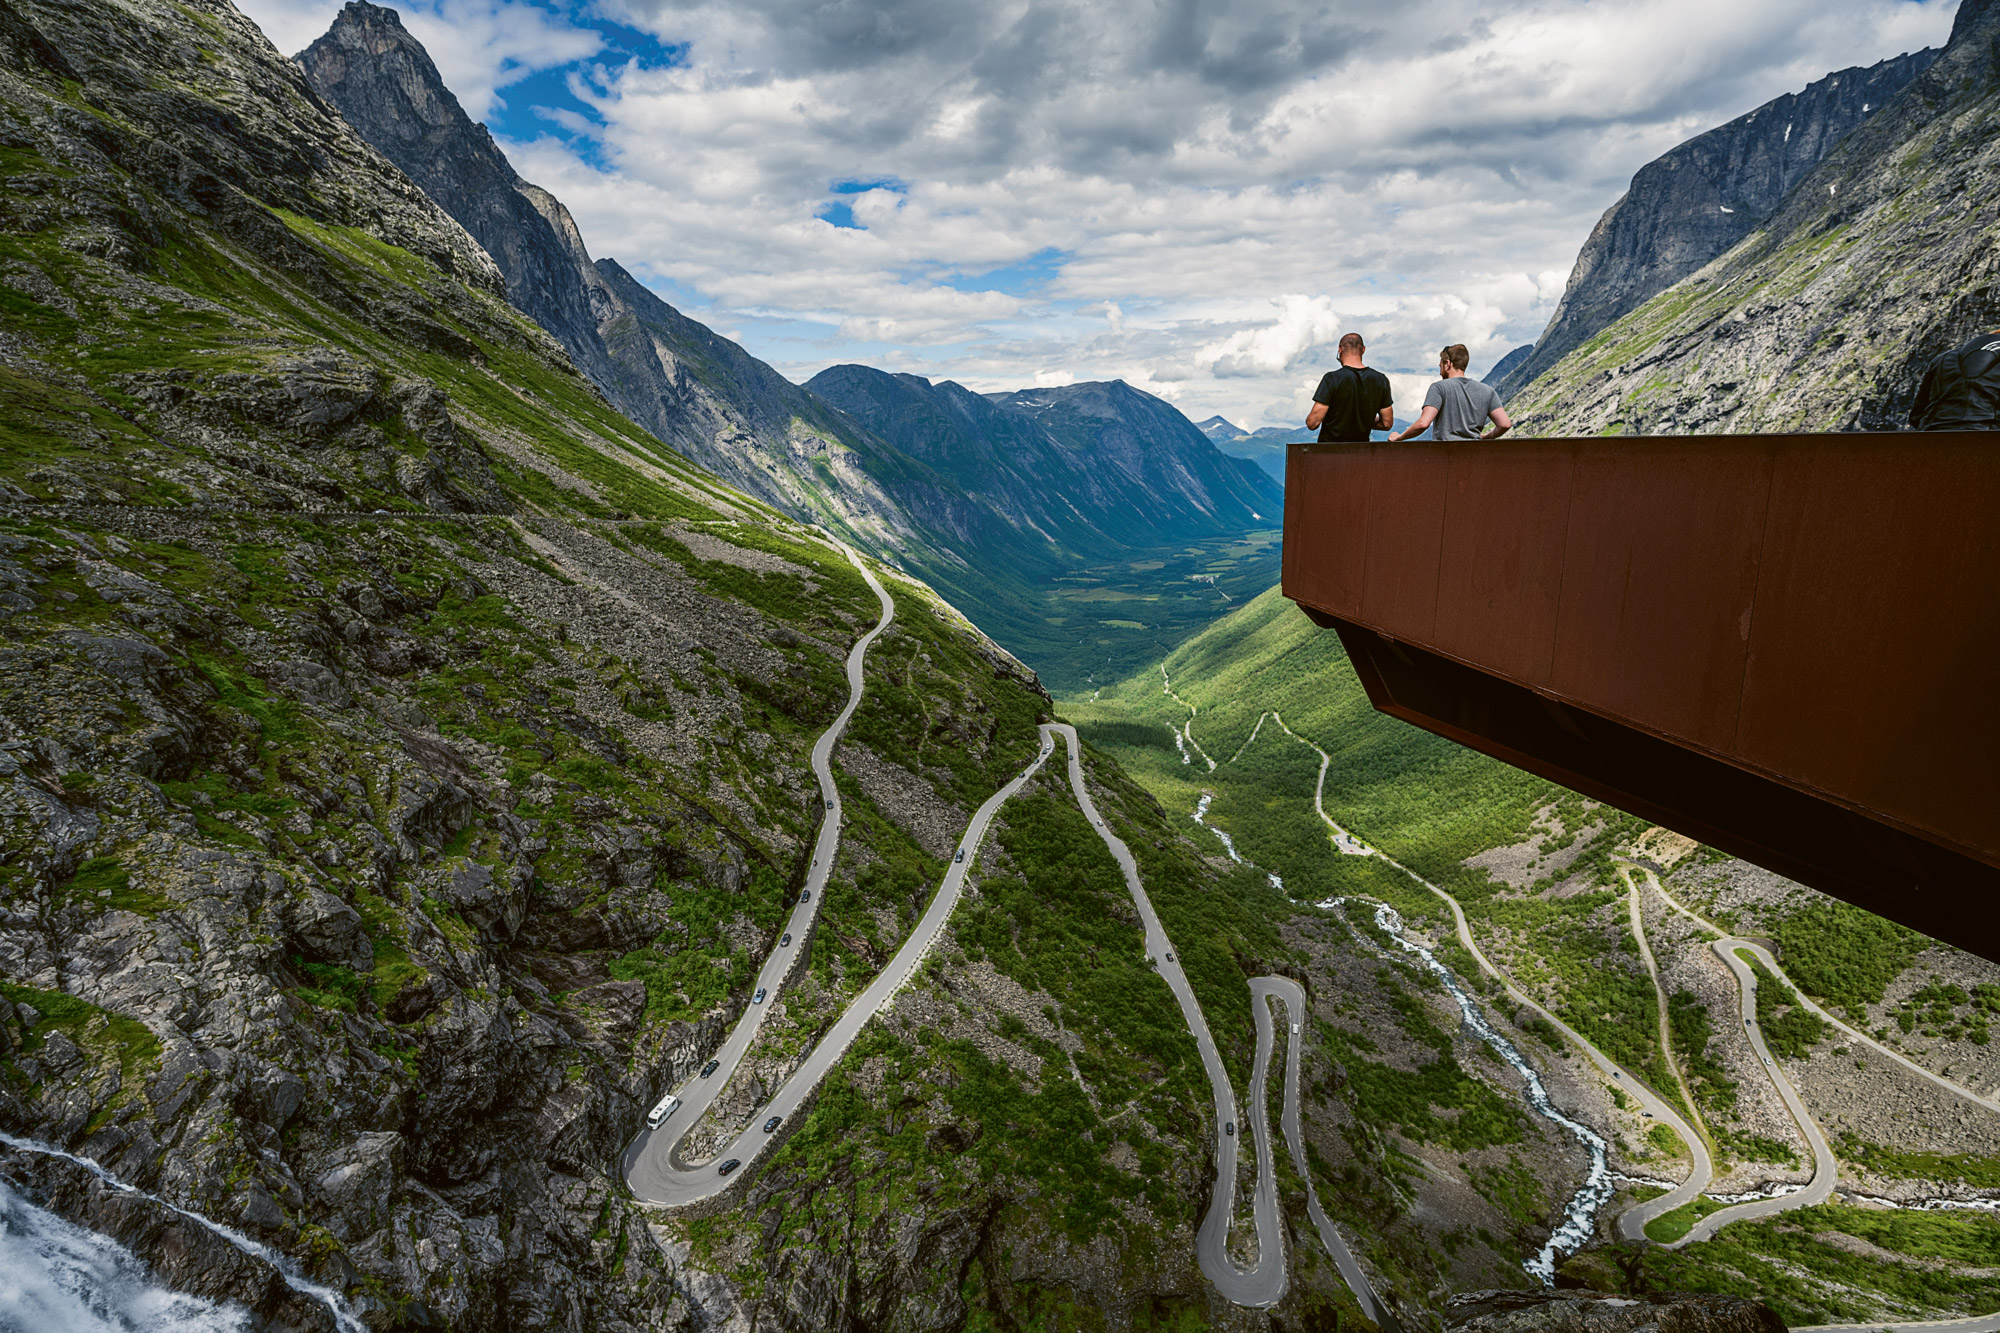 Two men on platform enjoy view of valley roads below